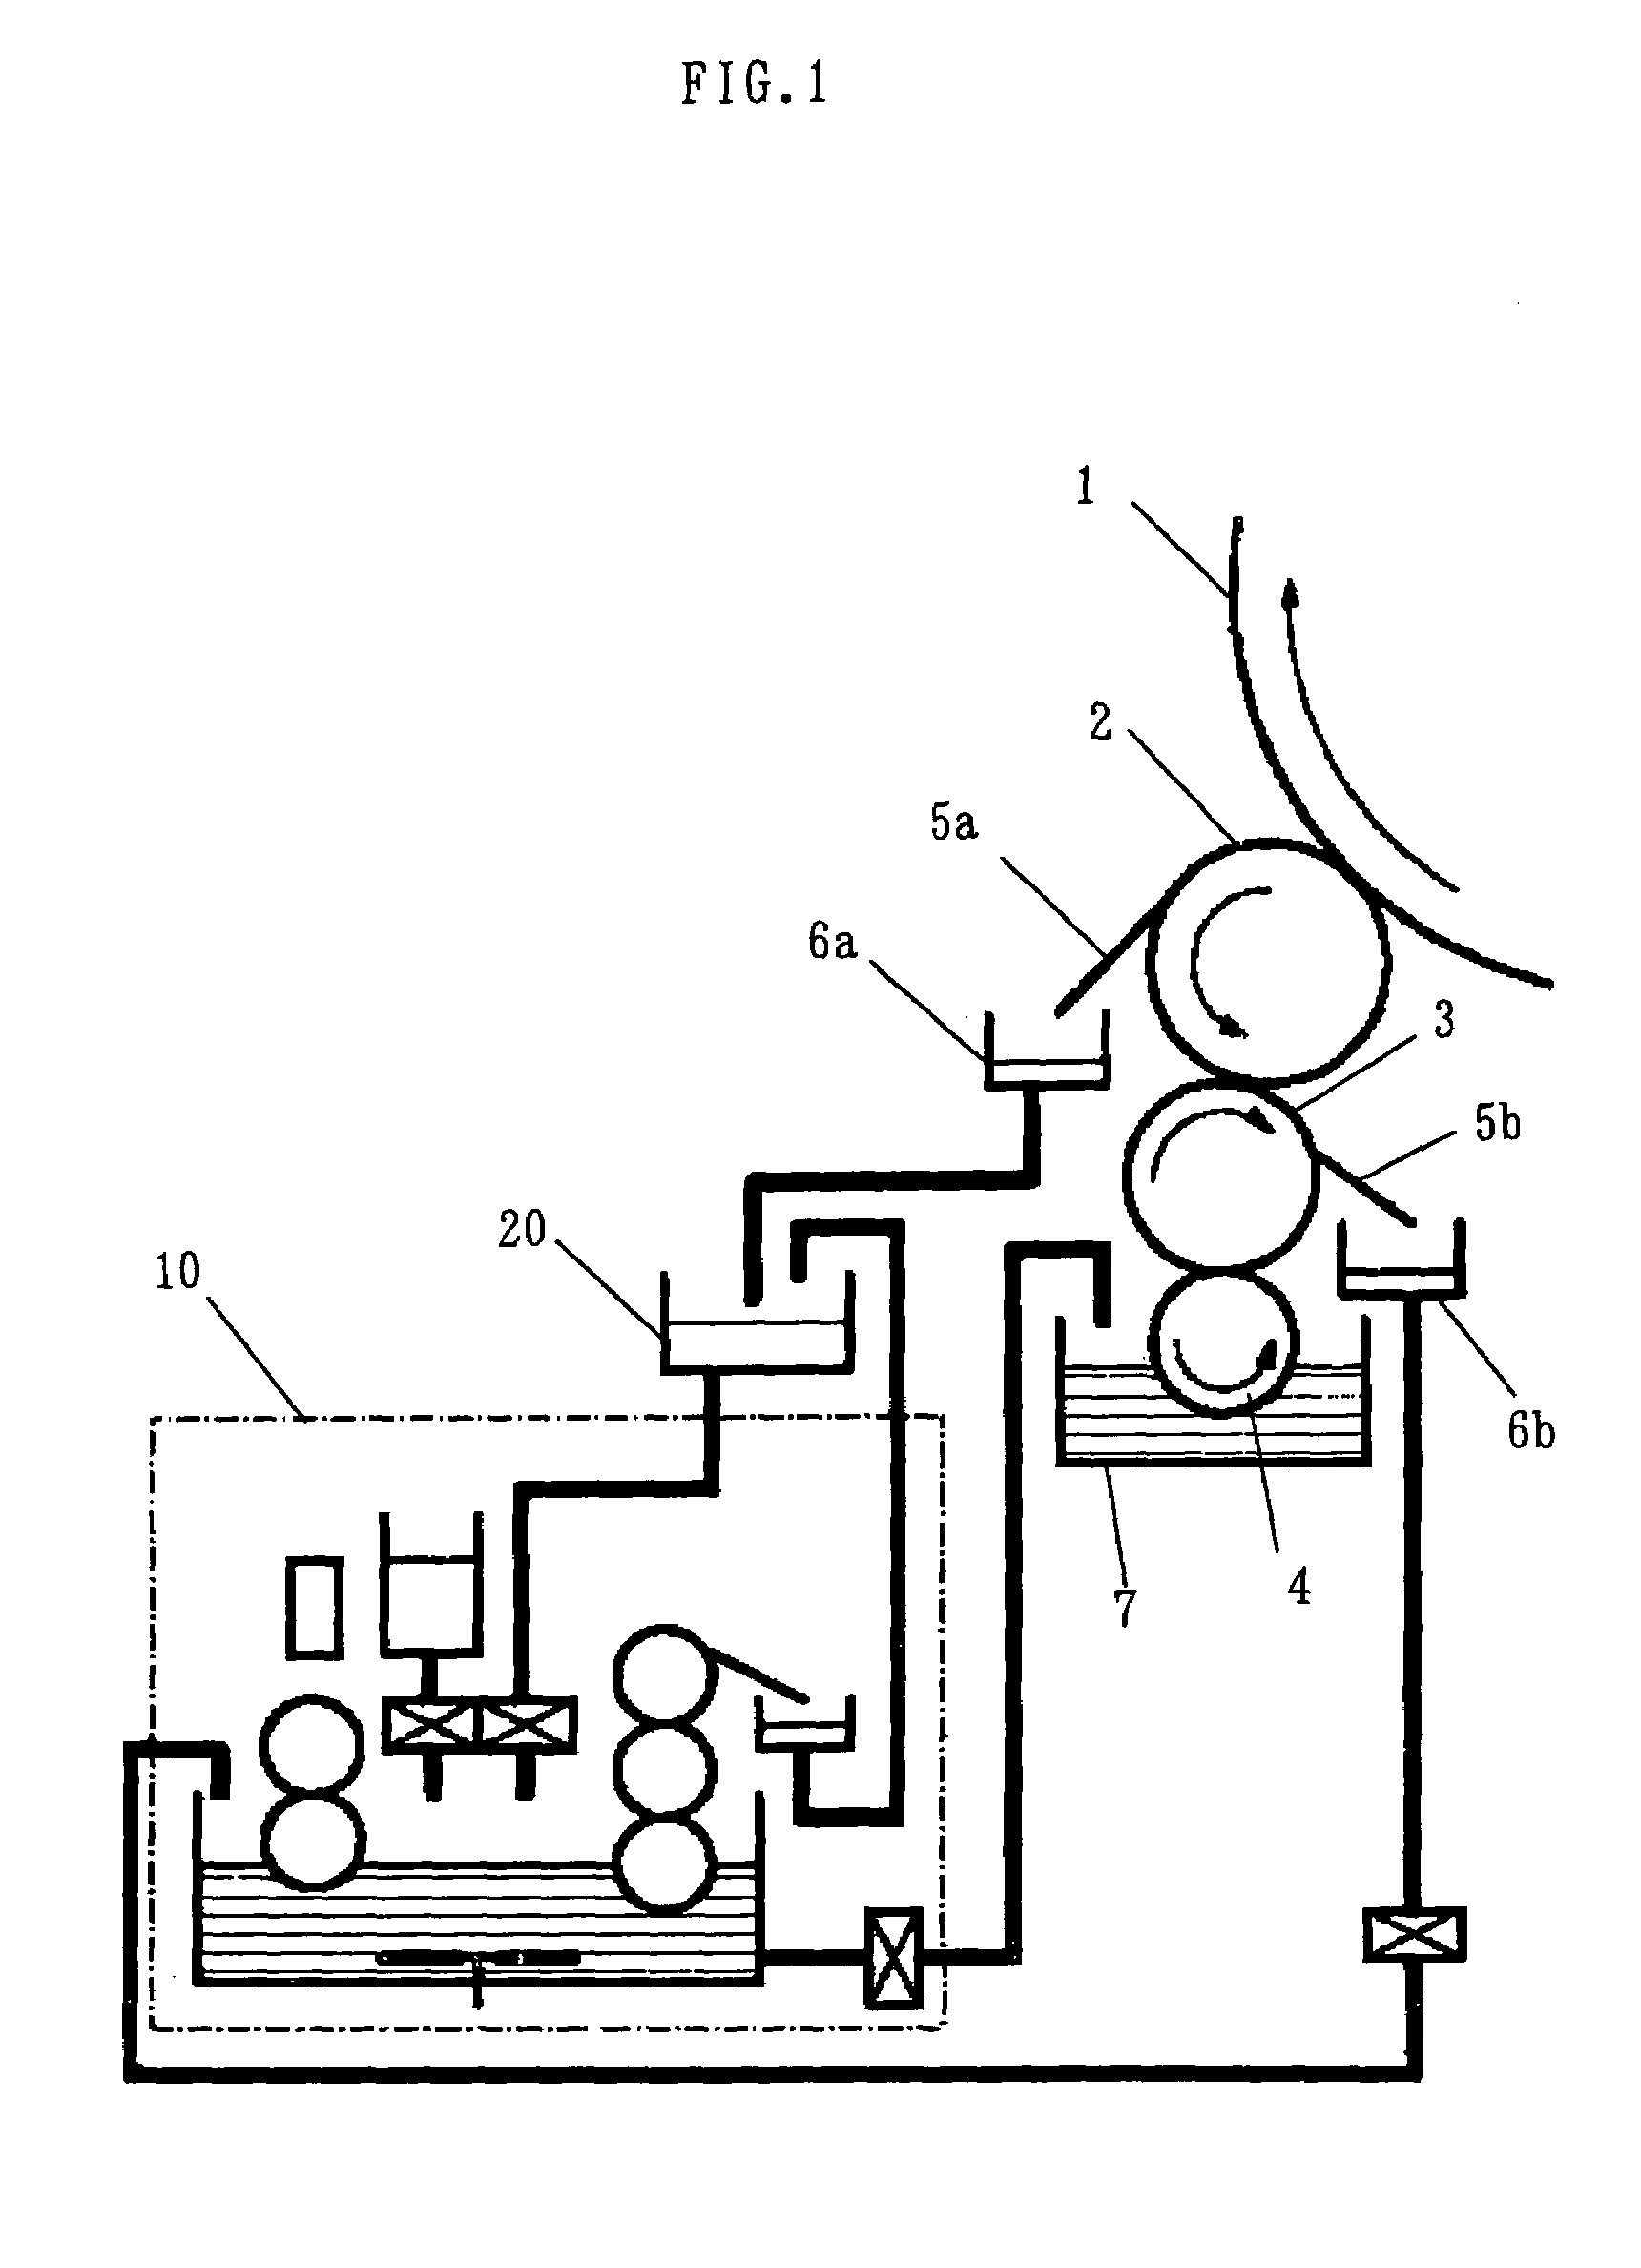 Toner concentration adjustment method and apparatus for liquid-development electrophotographic apparatus